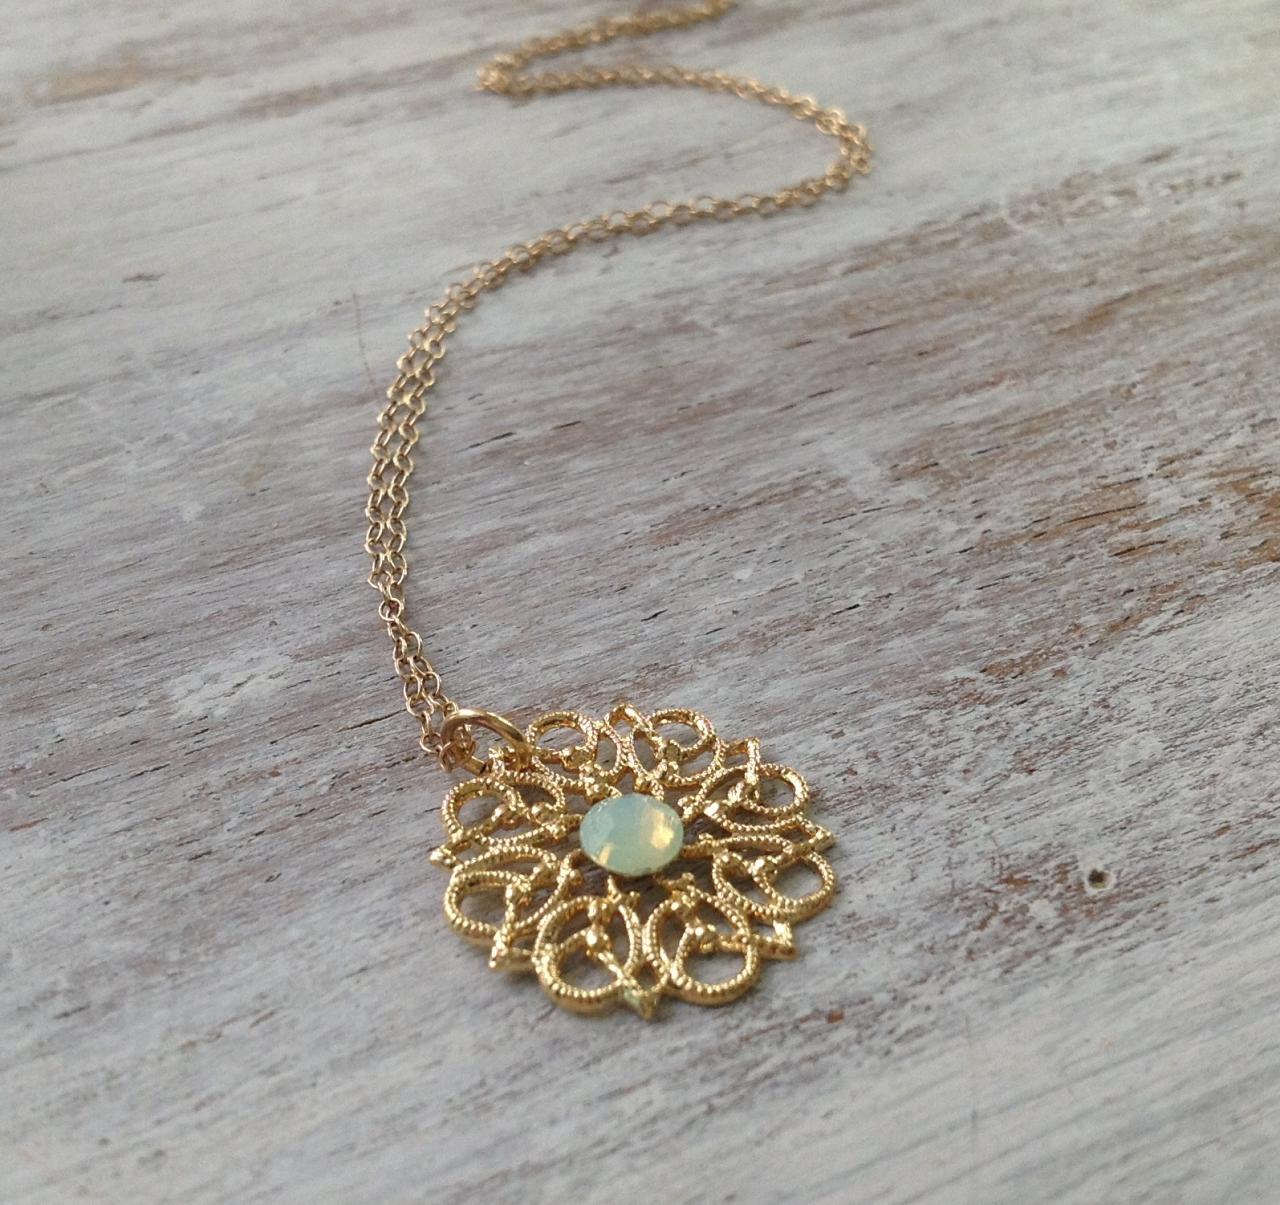 gold necklace, Gold flower necklace, delicate necklace, swarovski stone, lace pattern necklace 7012